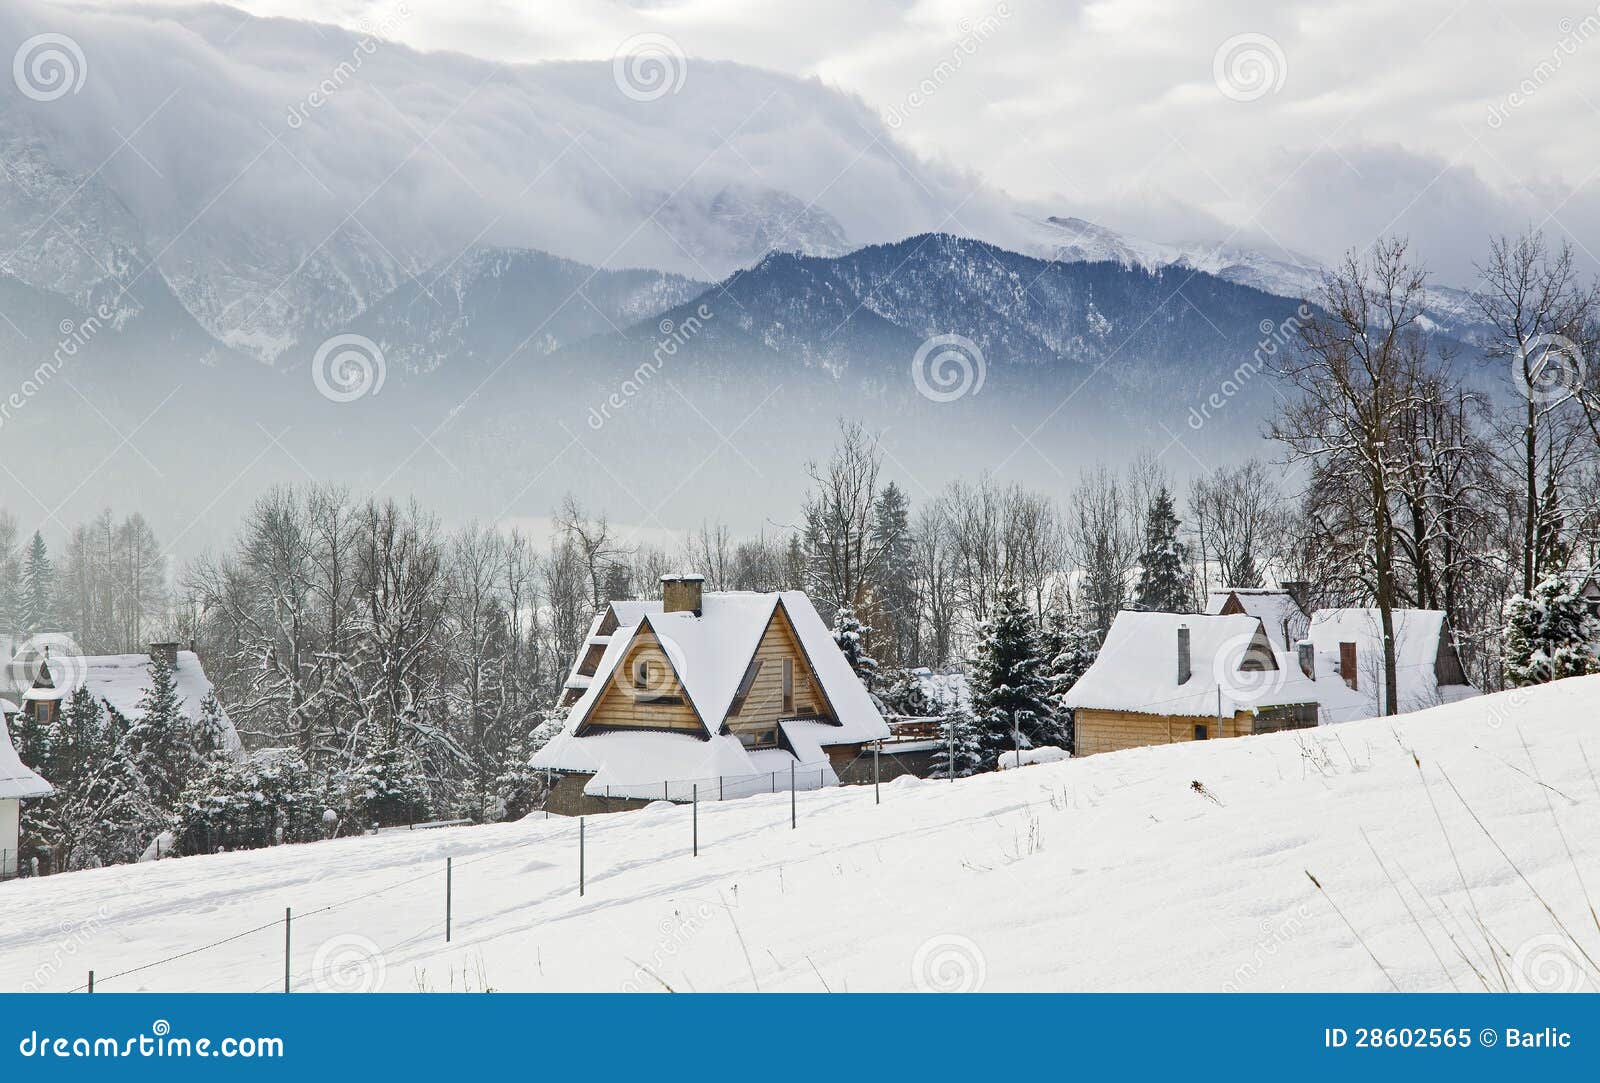 Tatra mountains. Mountains Tatra in winter scenery